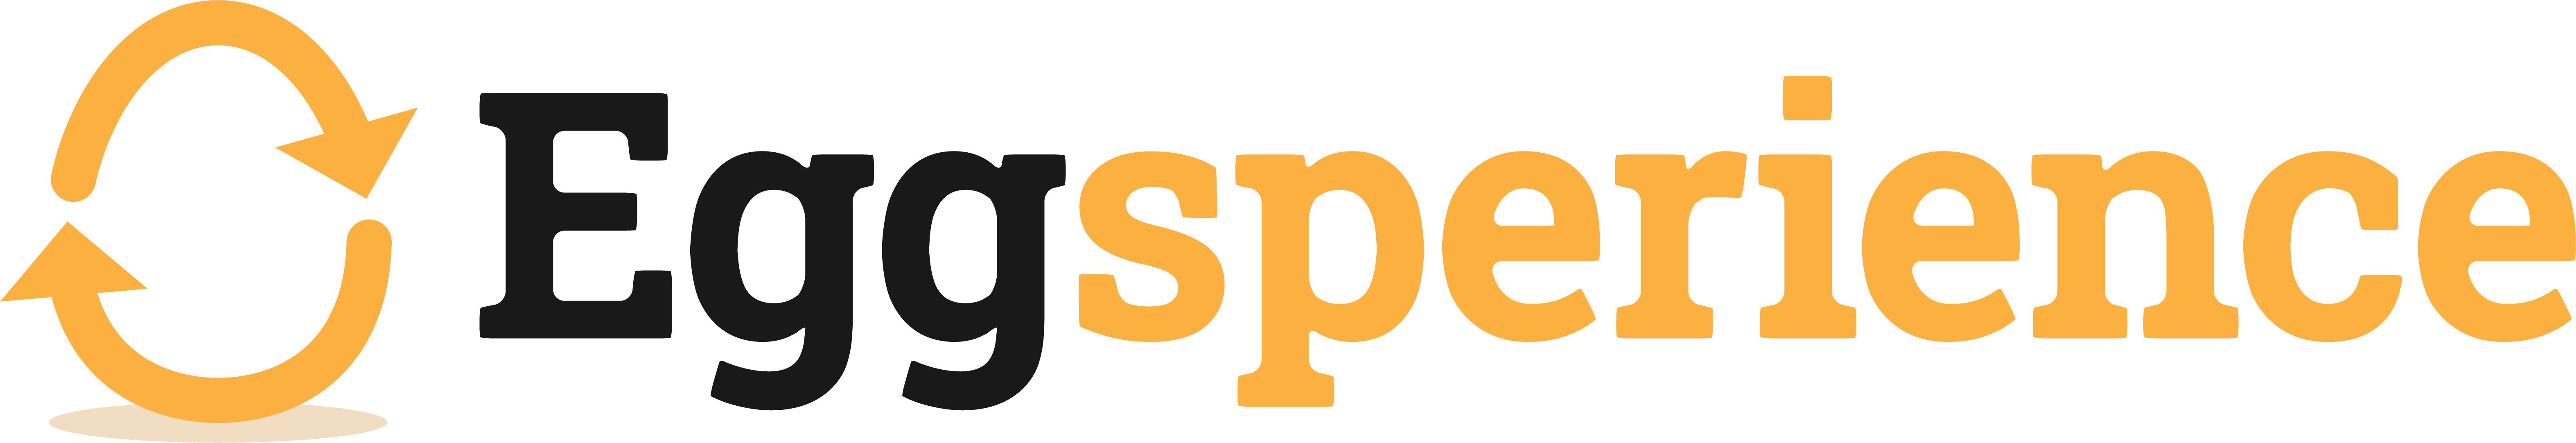 Eggsperience Logo